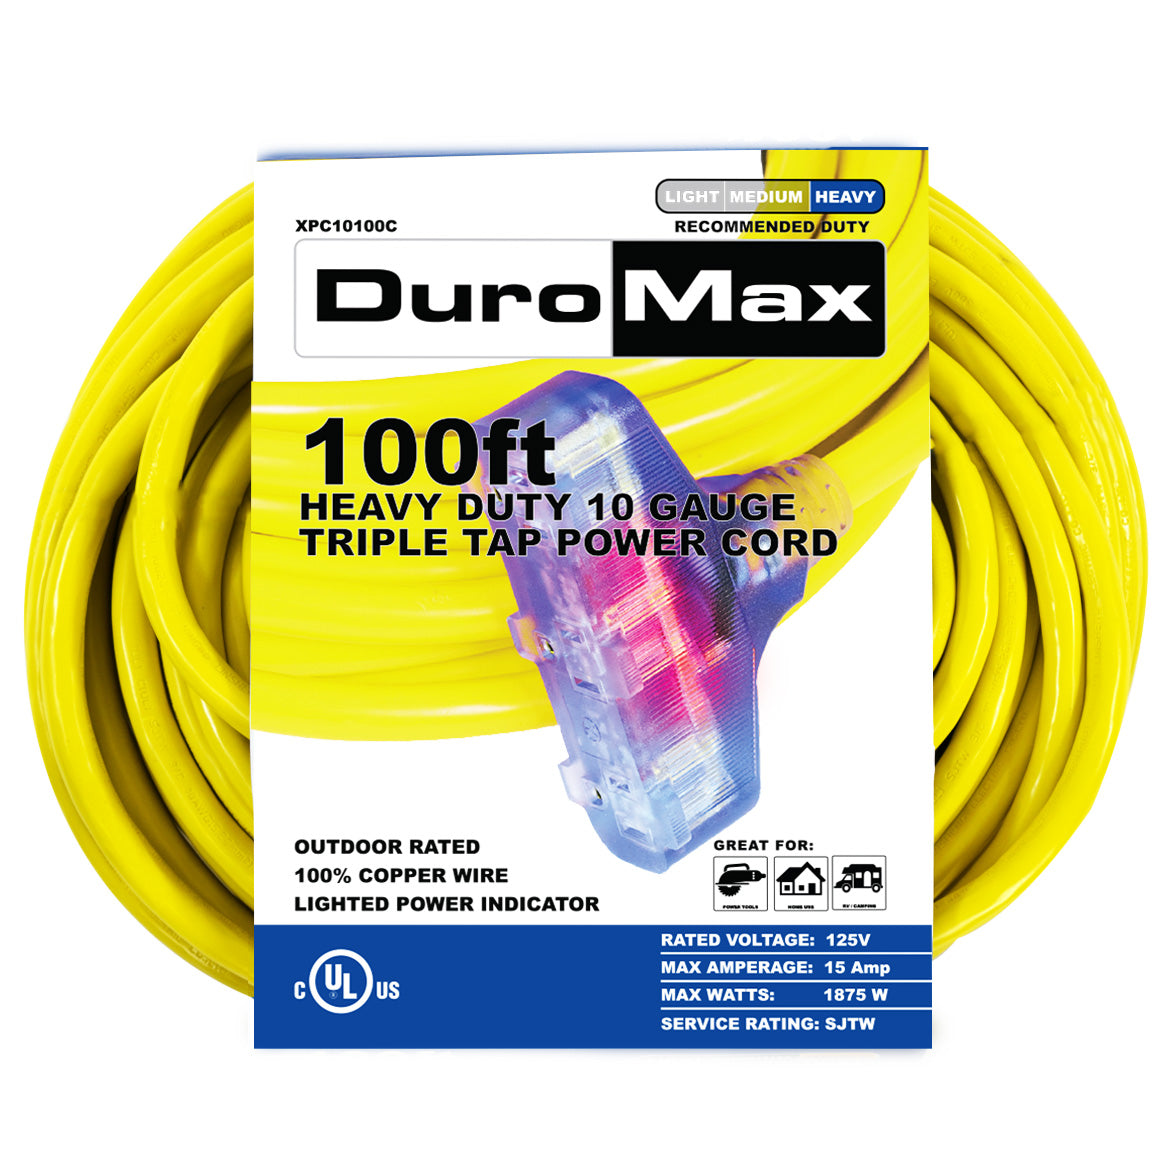 DuroMax XPC10100C 100' 10 Gauge Triple Tap Extension Power Cord